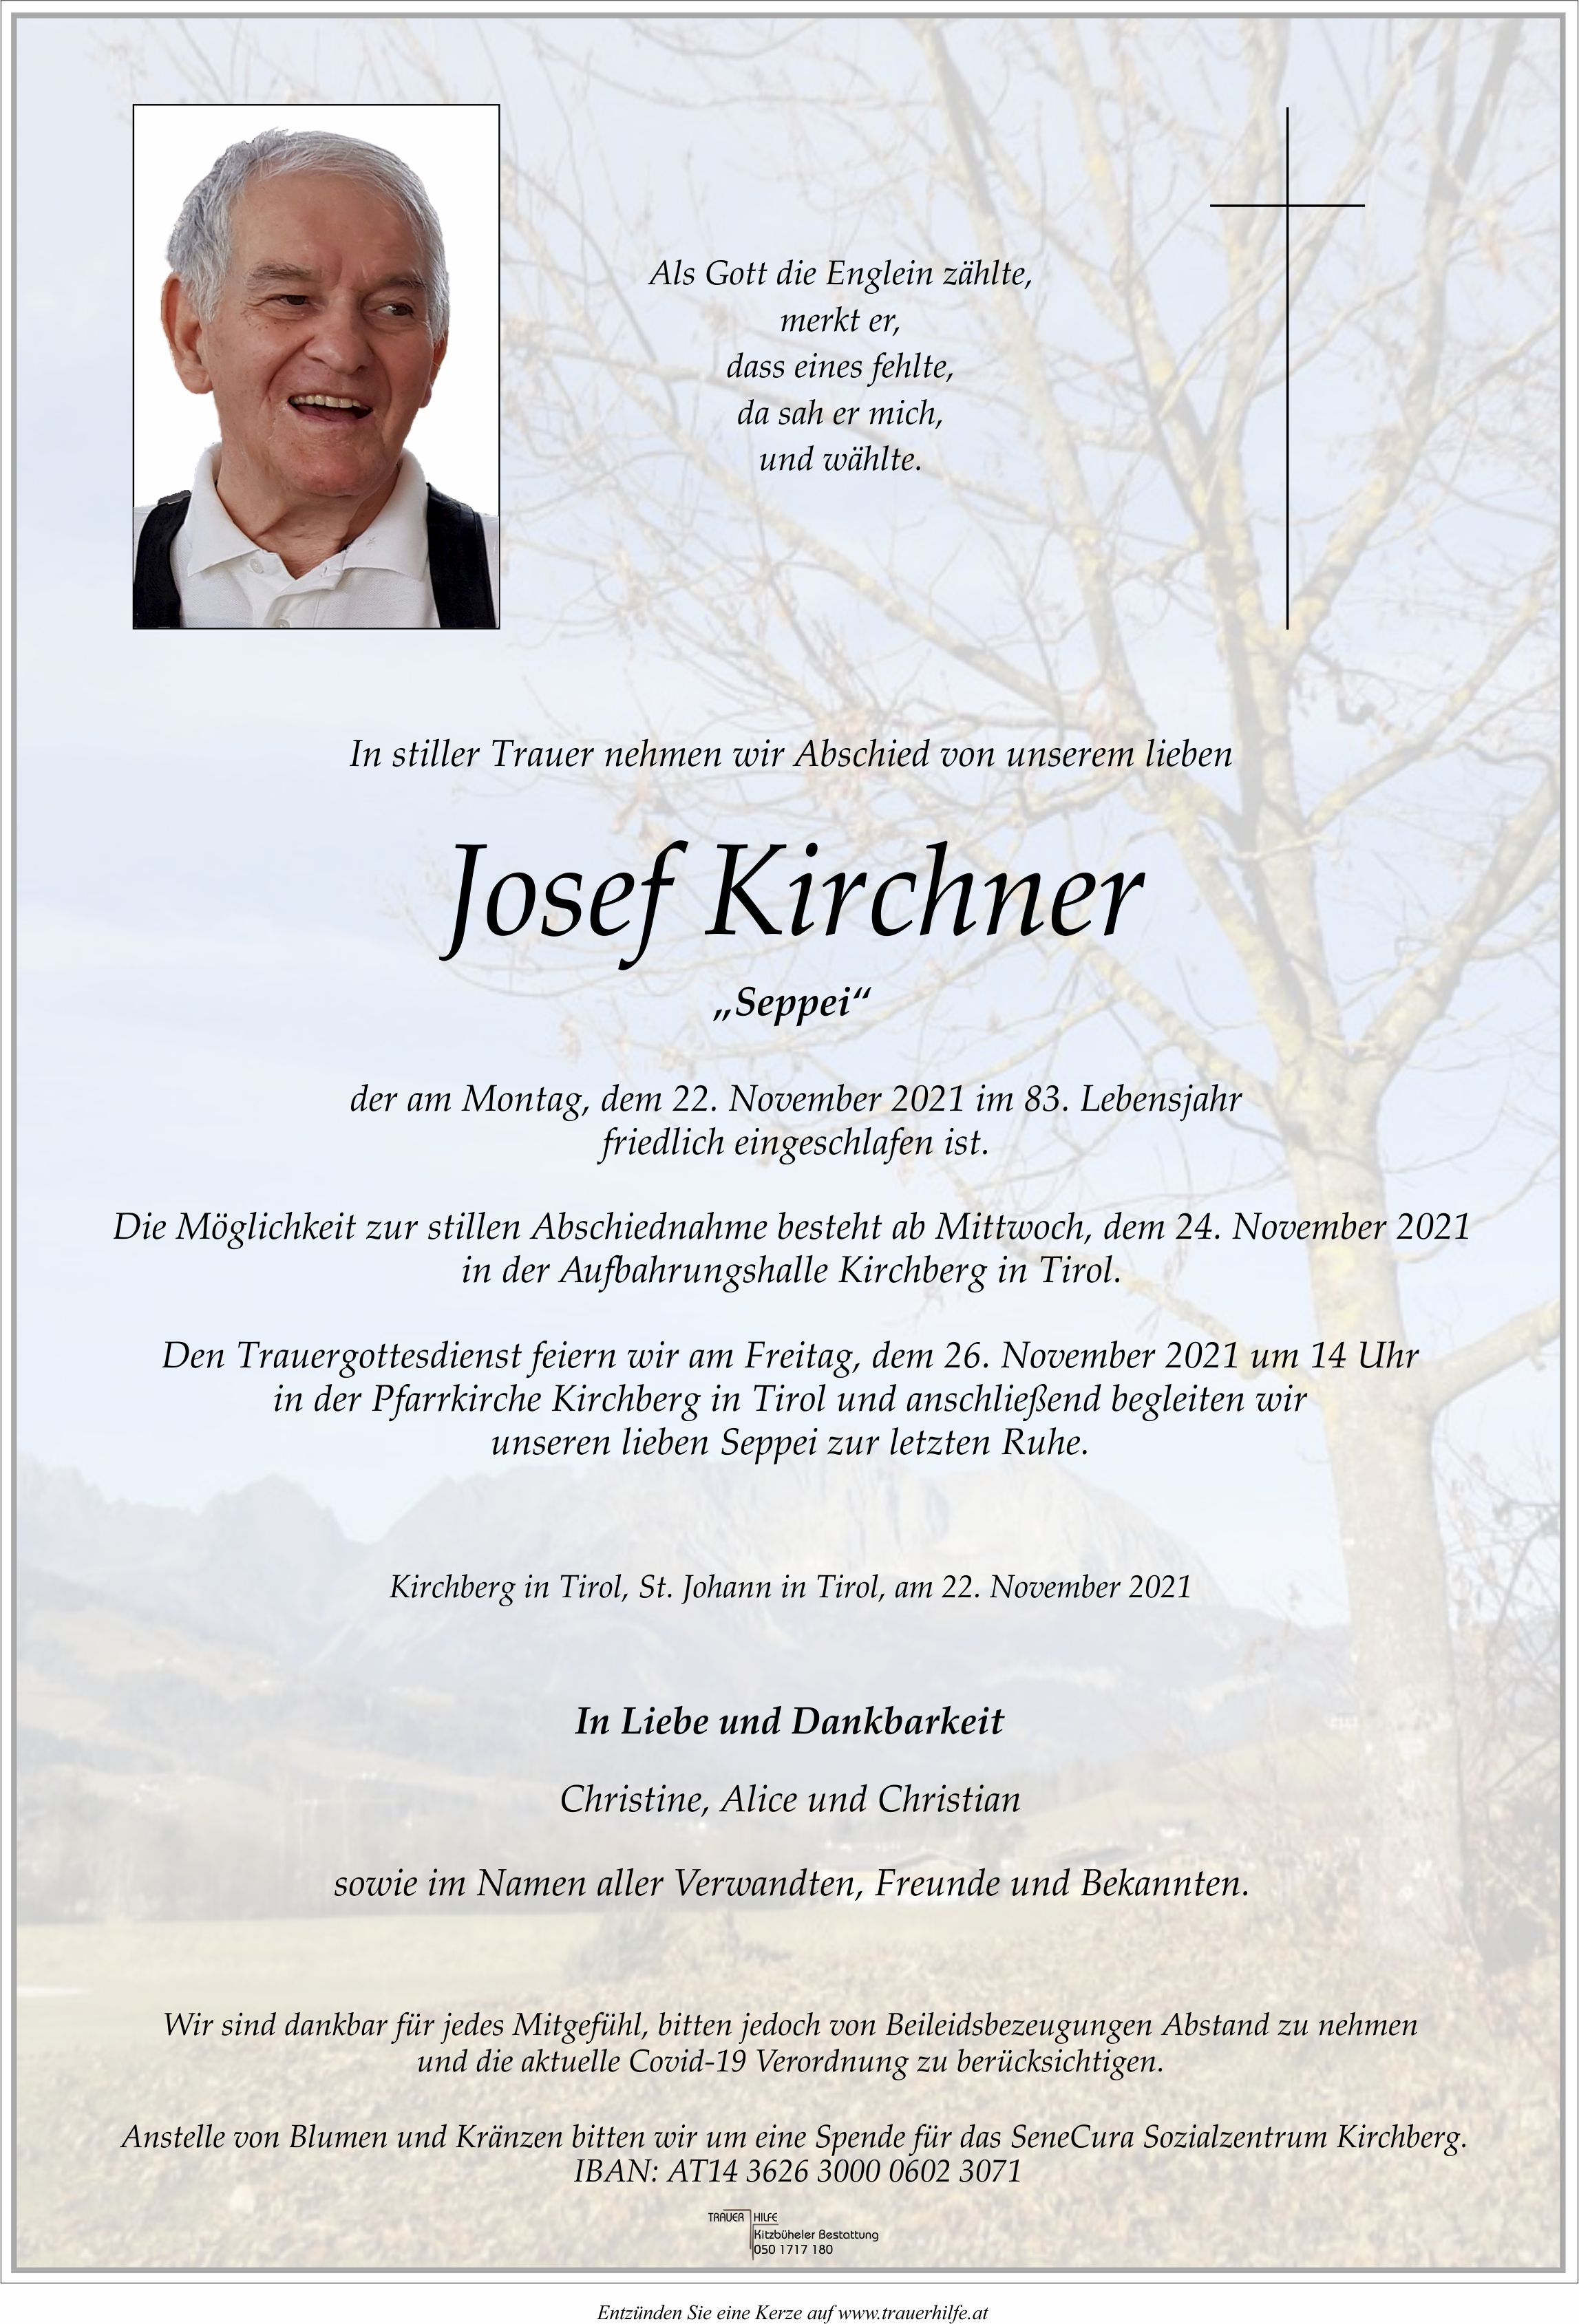 Josef Kirchner